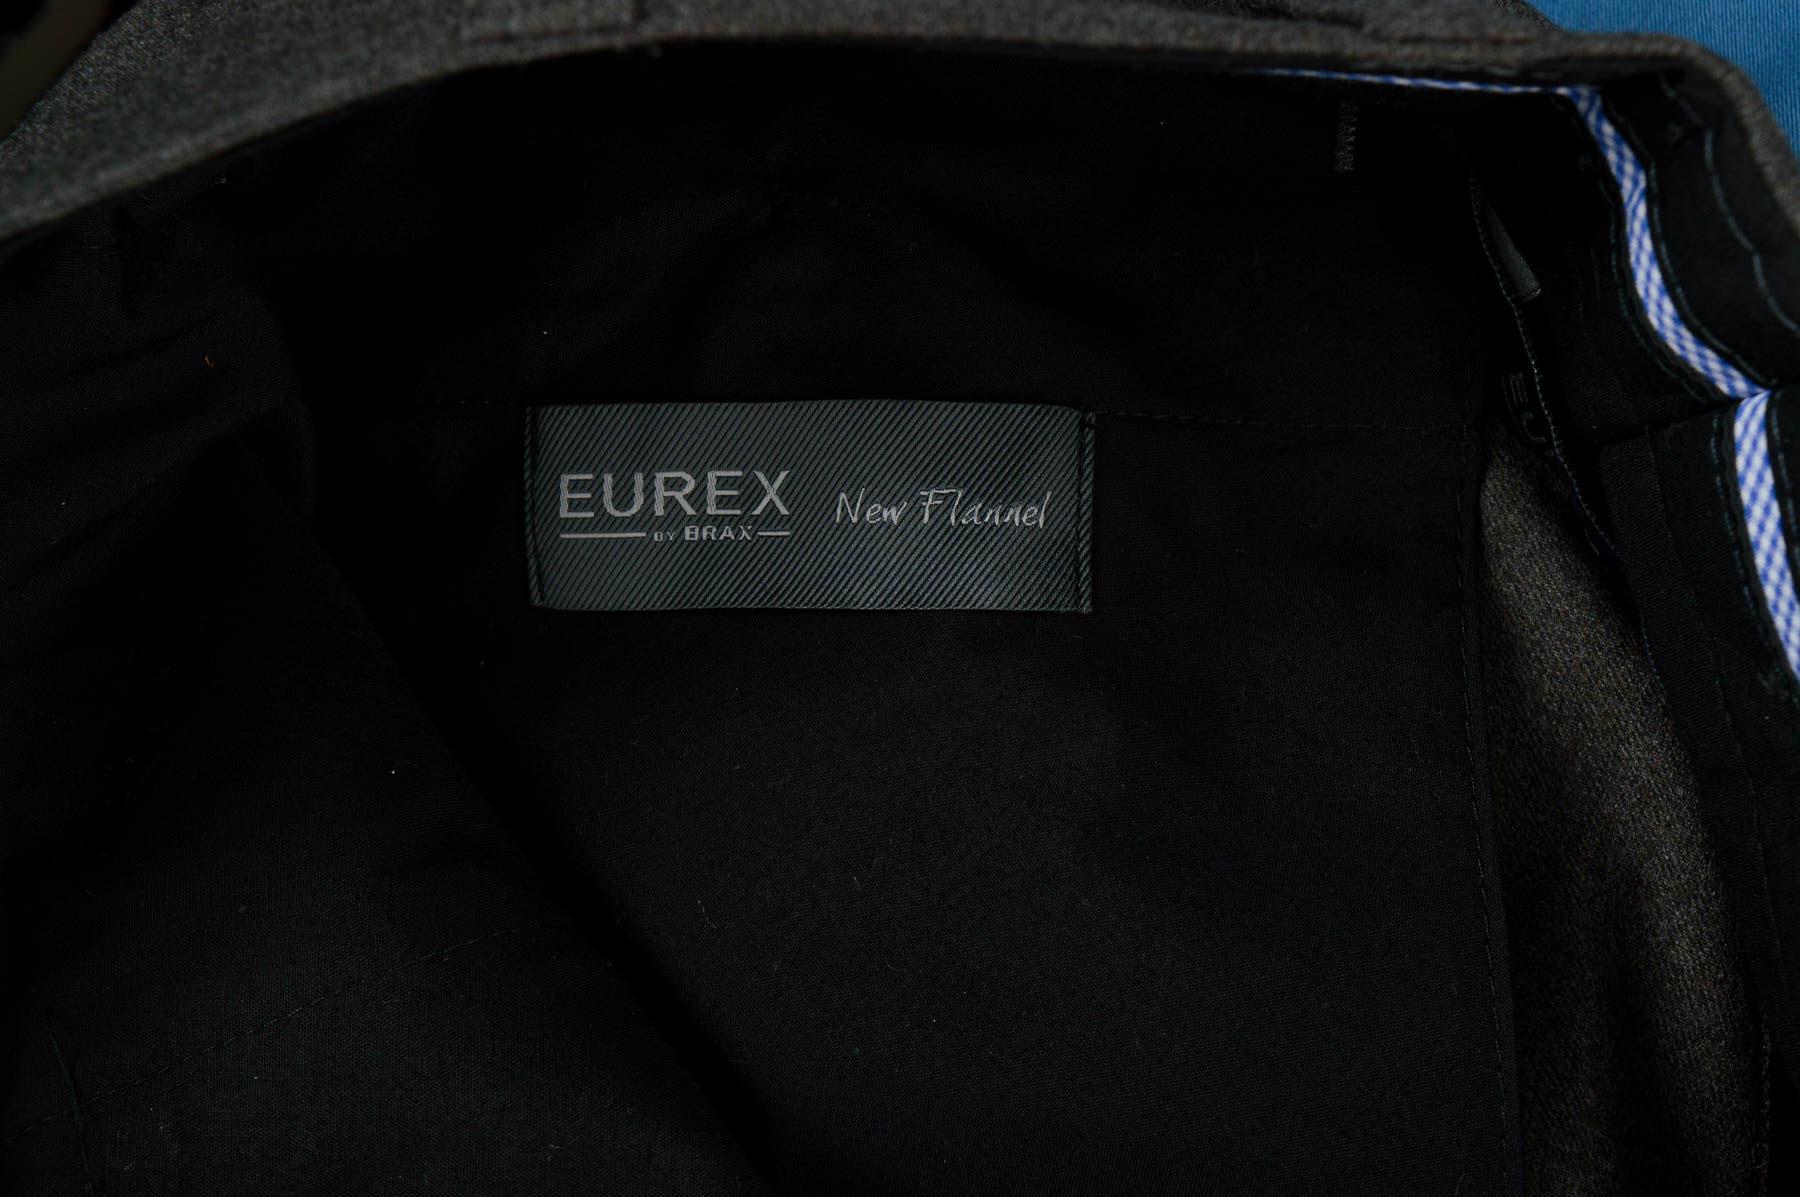 Men's trousers - EUREX BY BRAX - 2